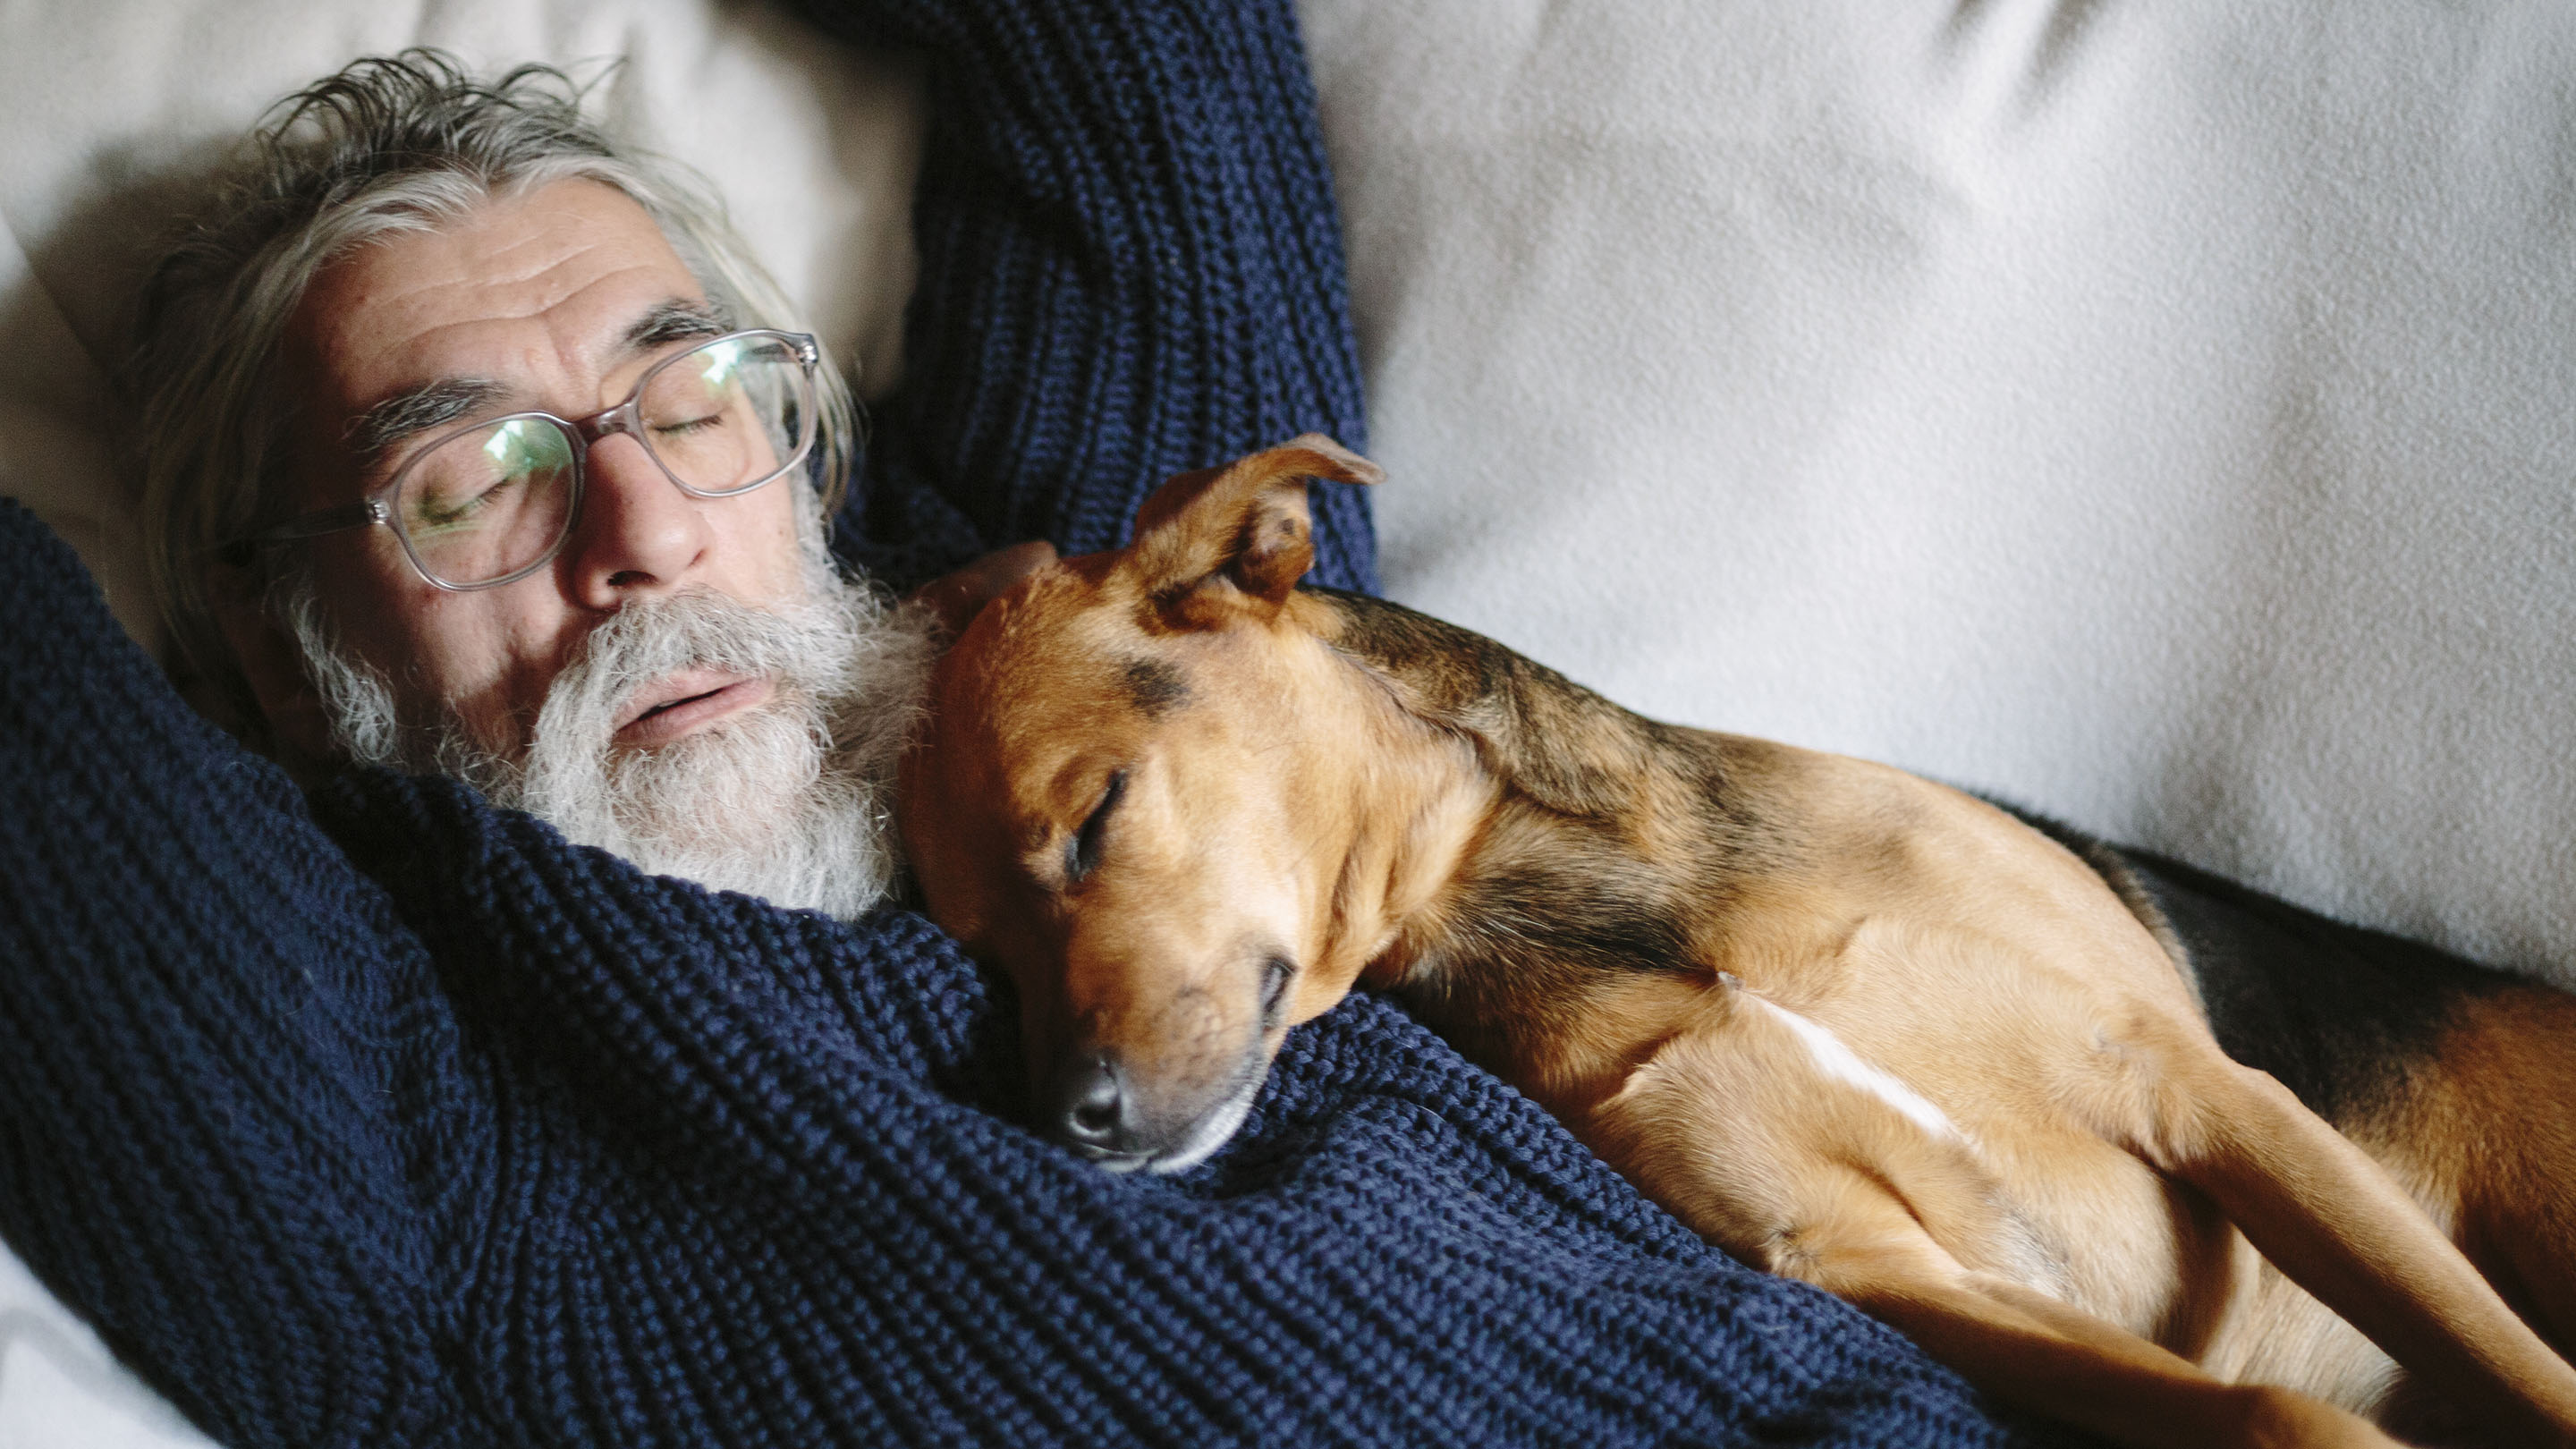 Man and dog both sleeping